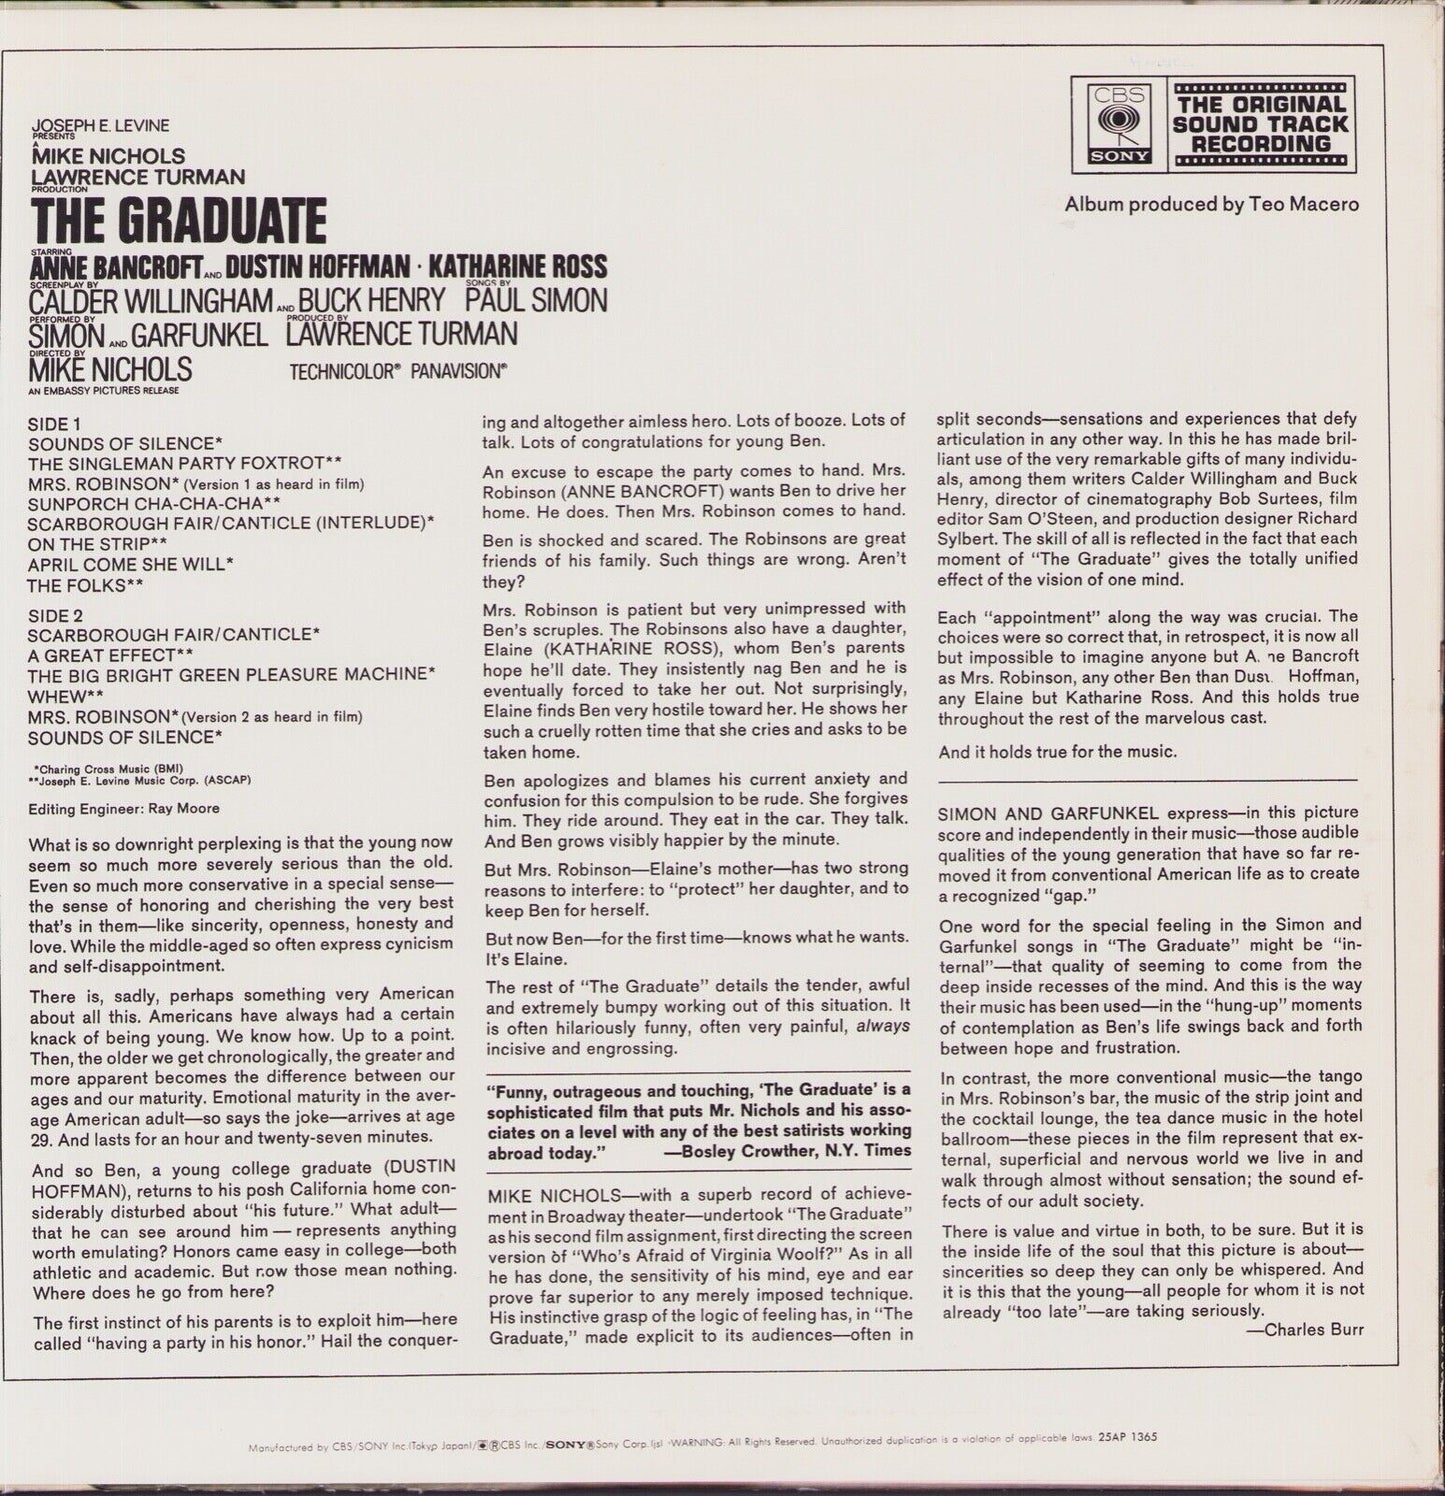 Paul Simon, Simon & Garfunkel, David Grusin - The Graduate: Original Soundtrack Vinyl LP